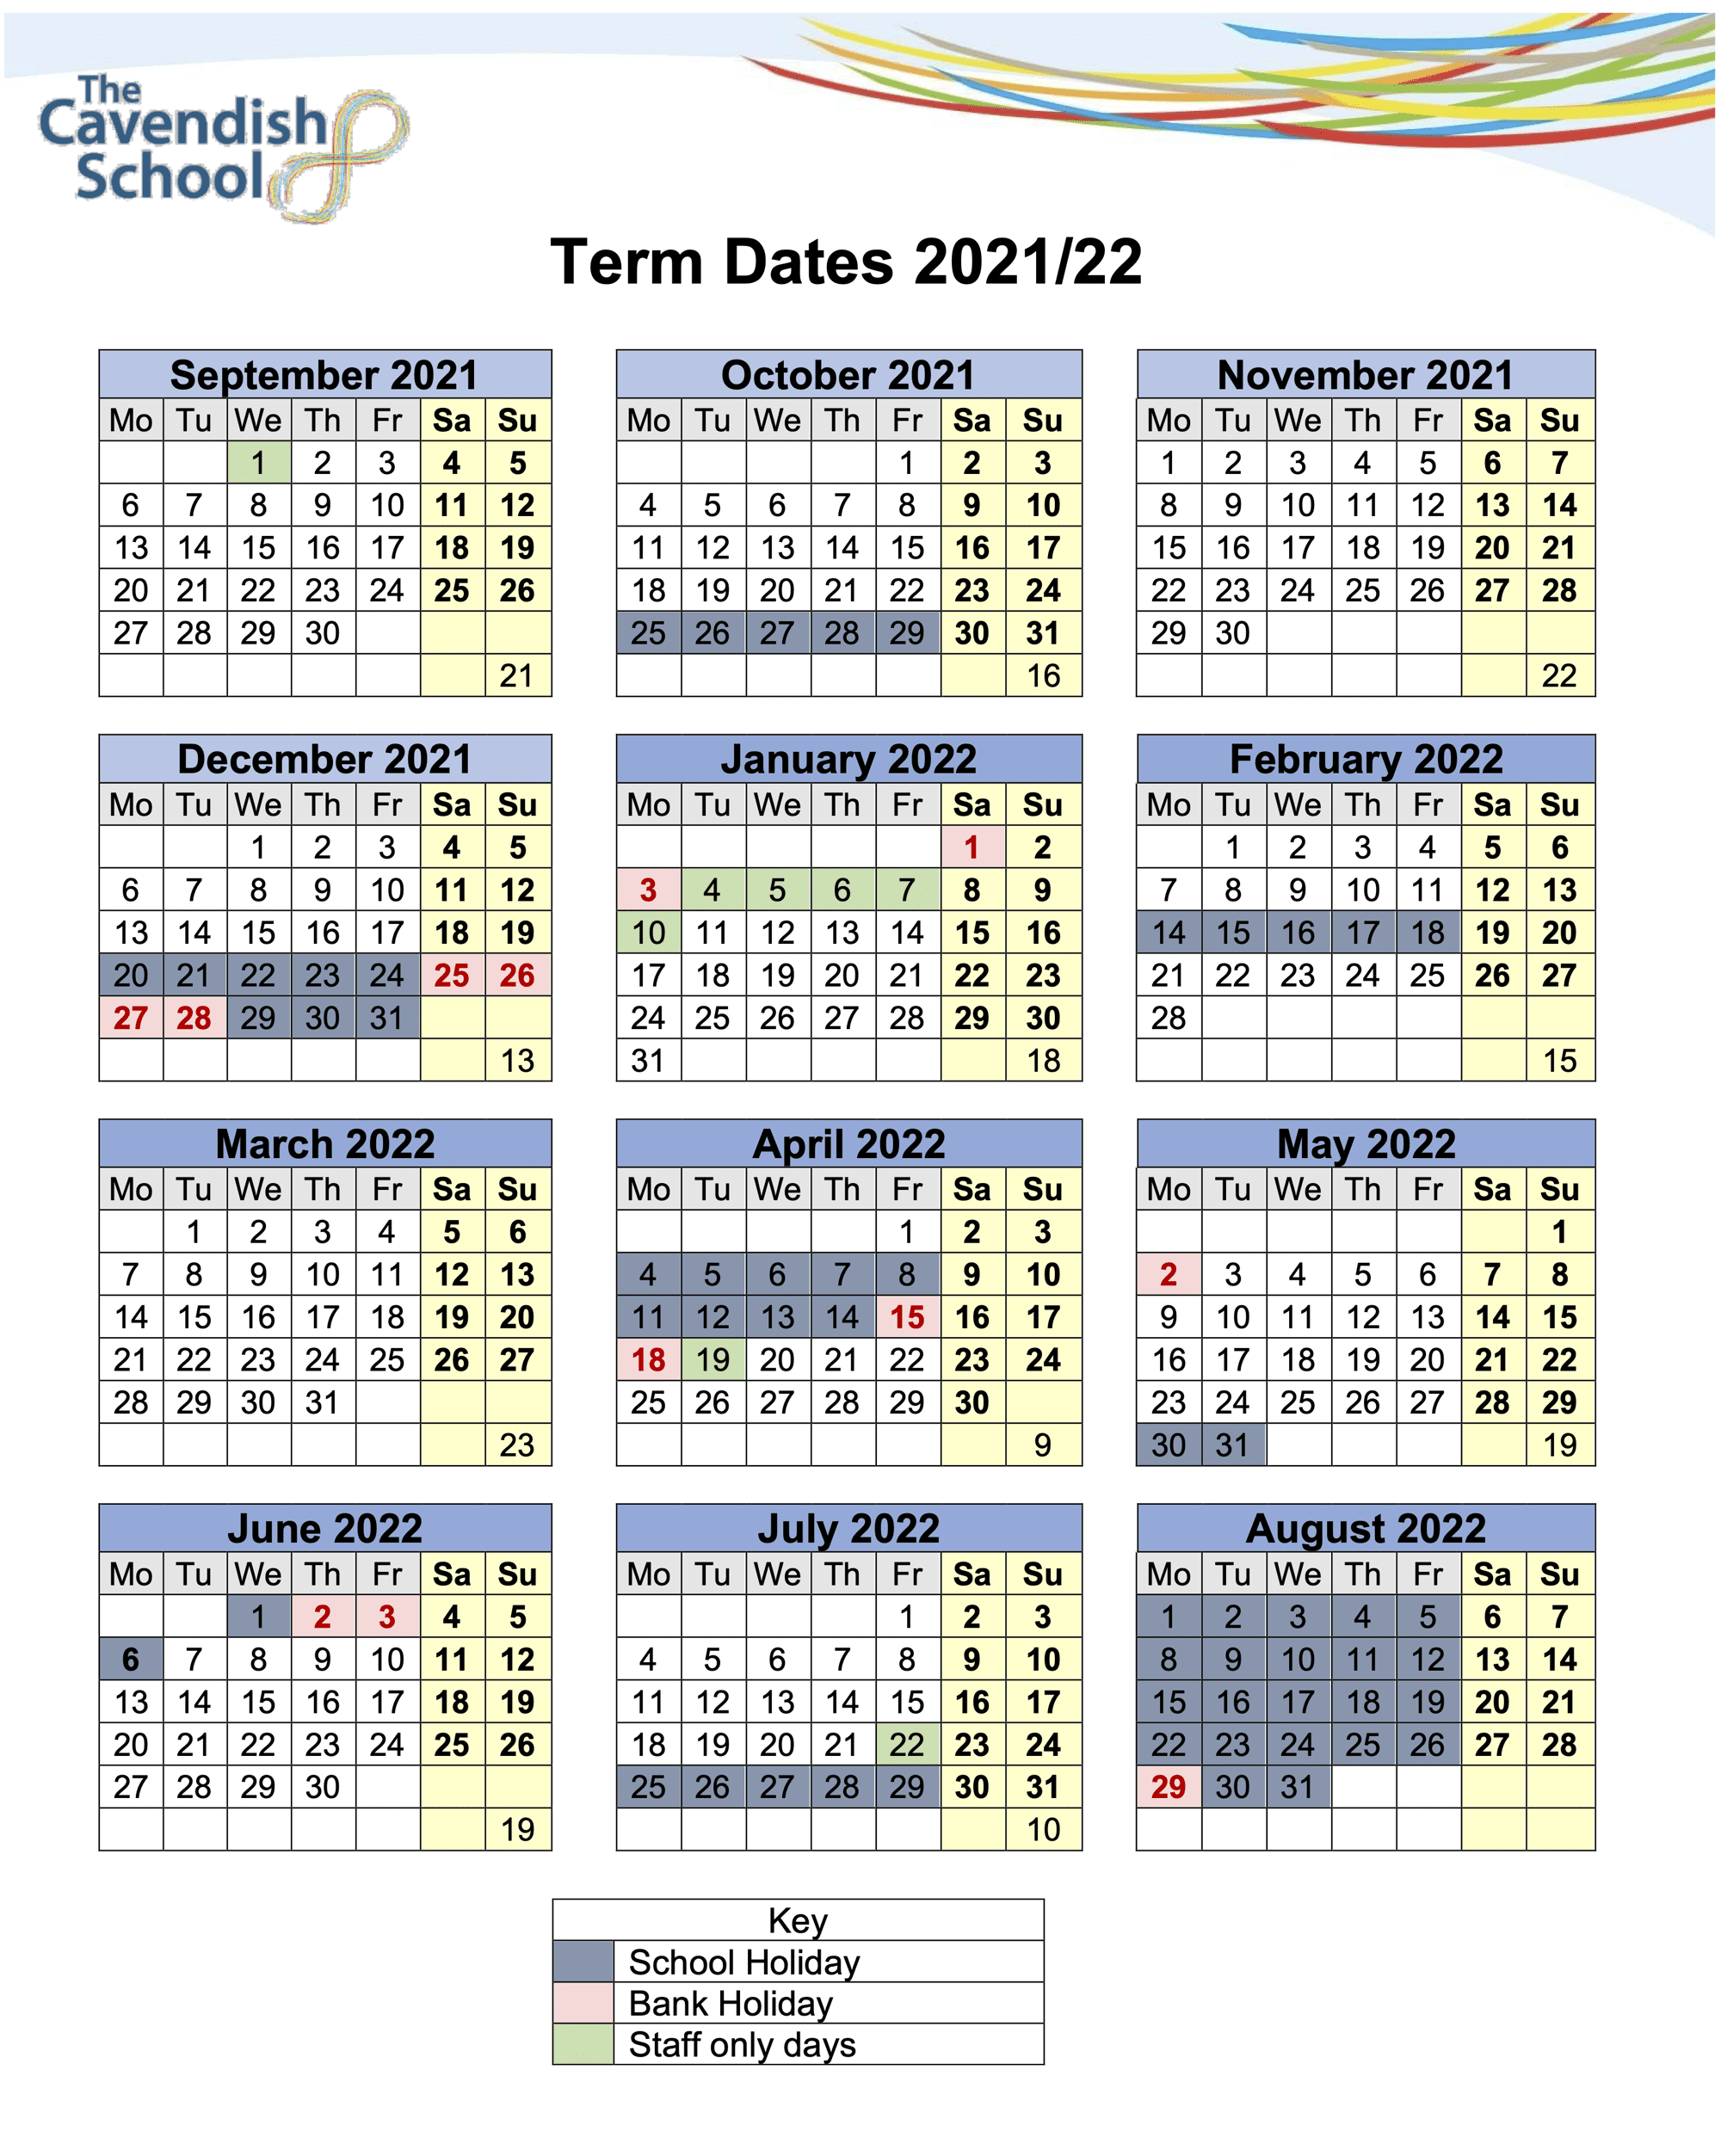 Term dates calendar for The Cavendish school